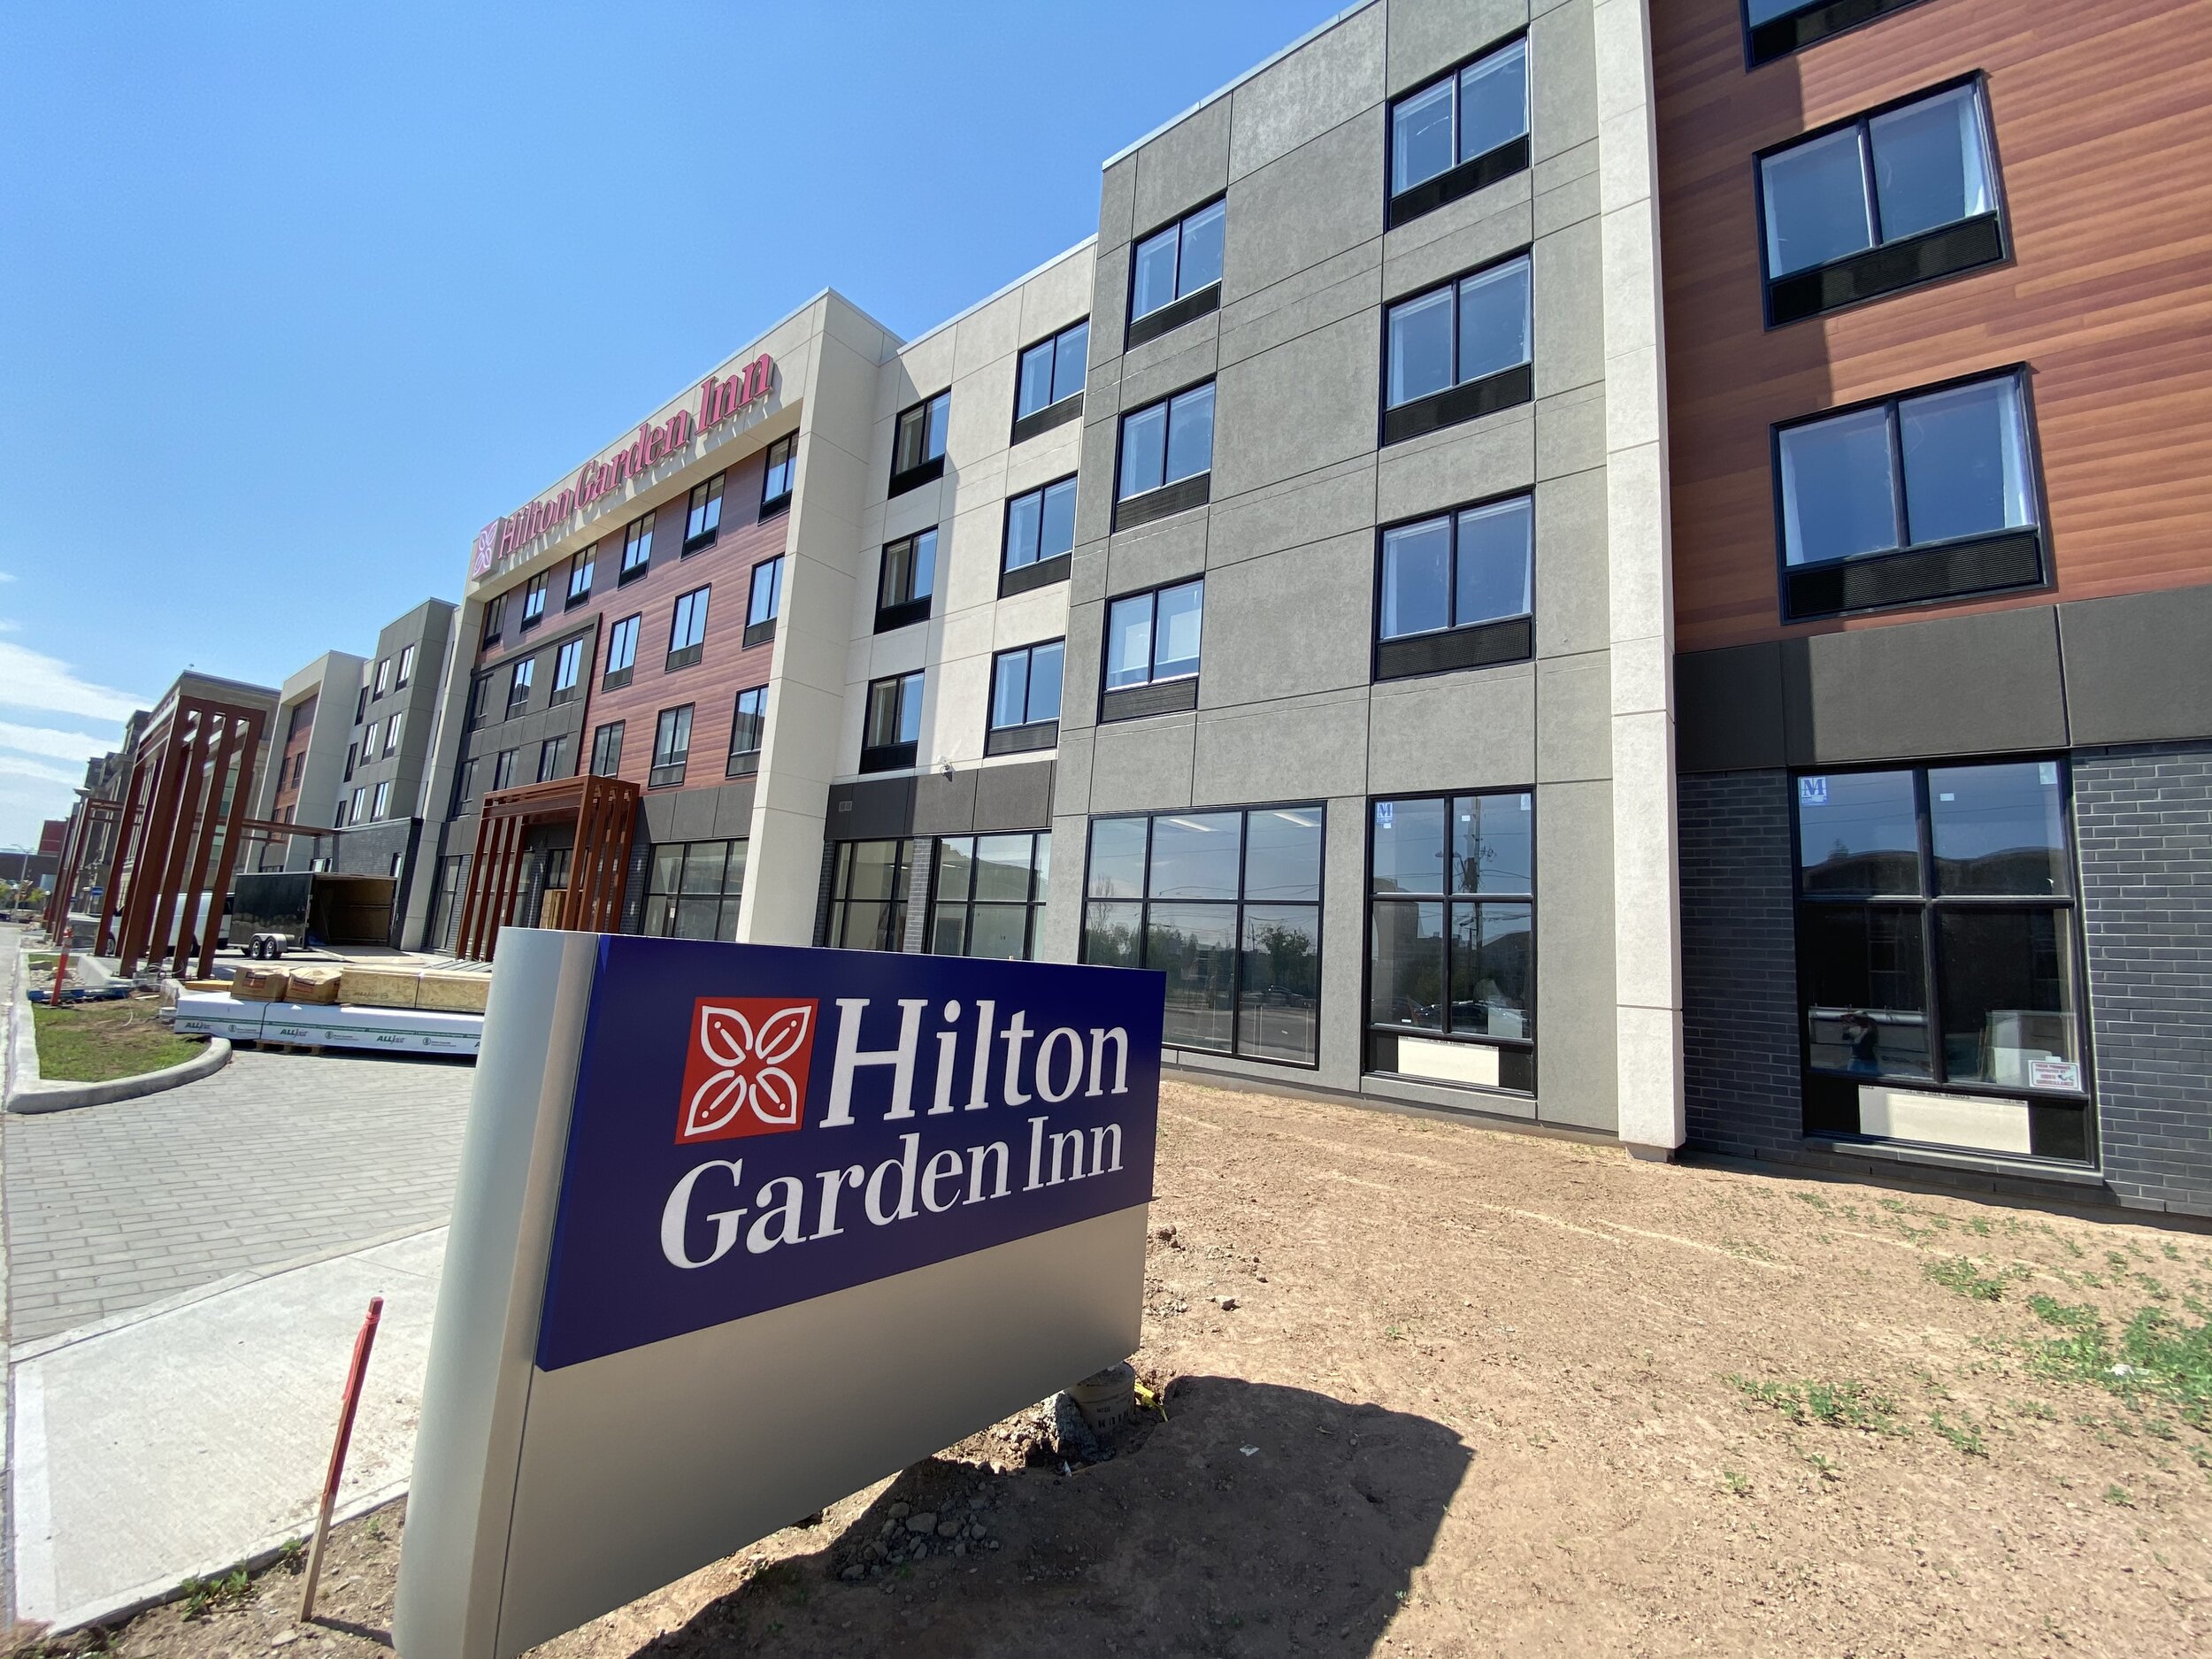 Hilton Garden Inn | Hotel Project (Copy)